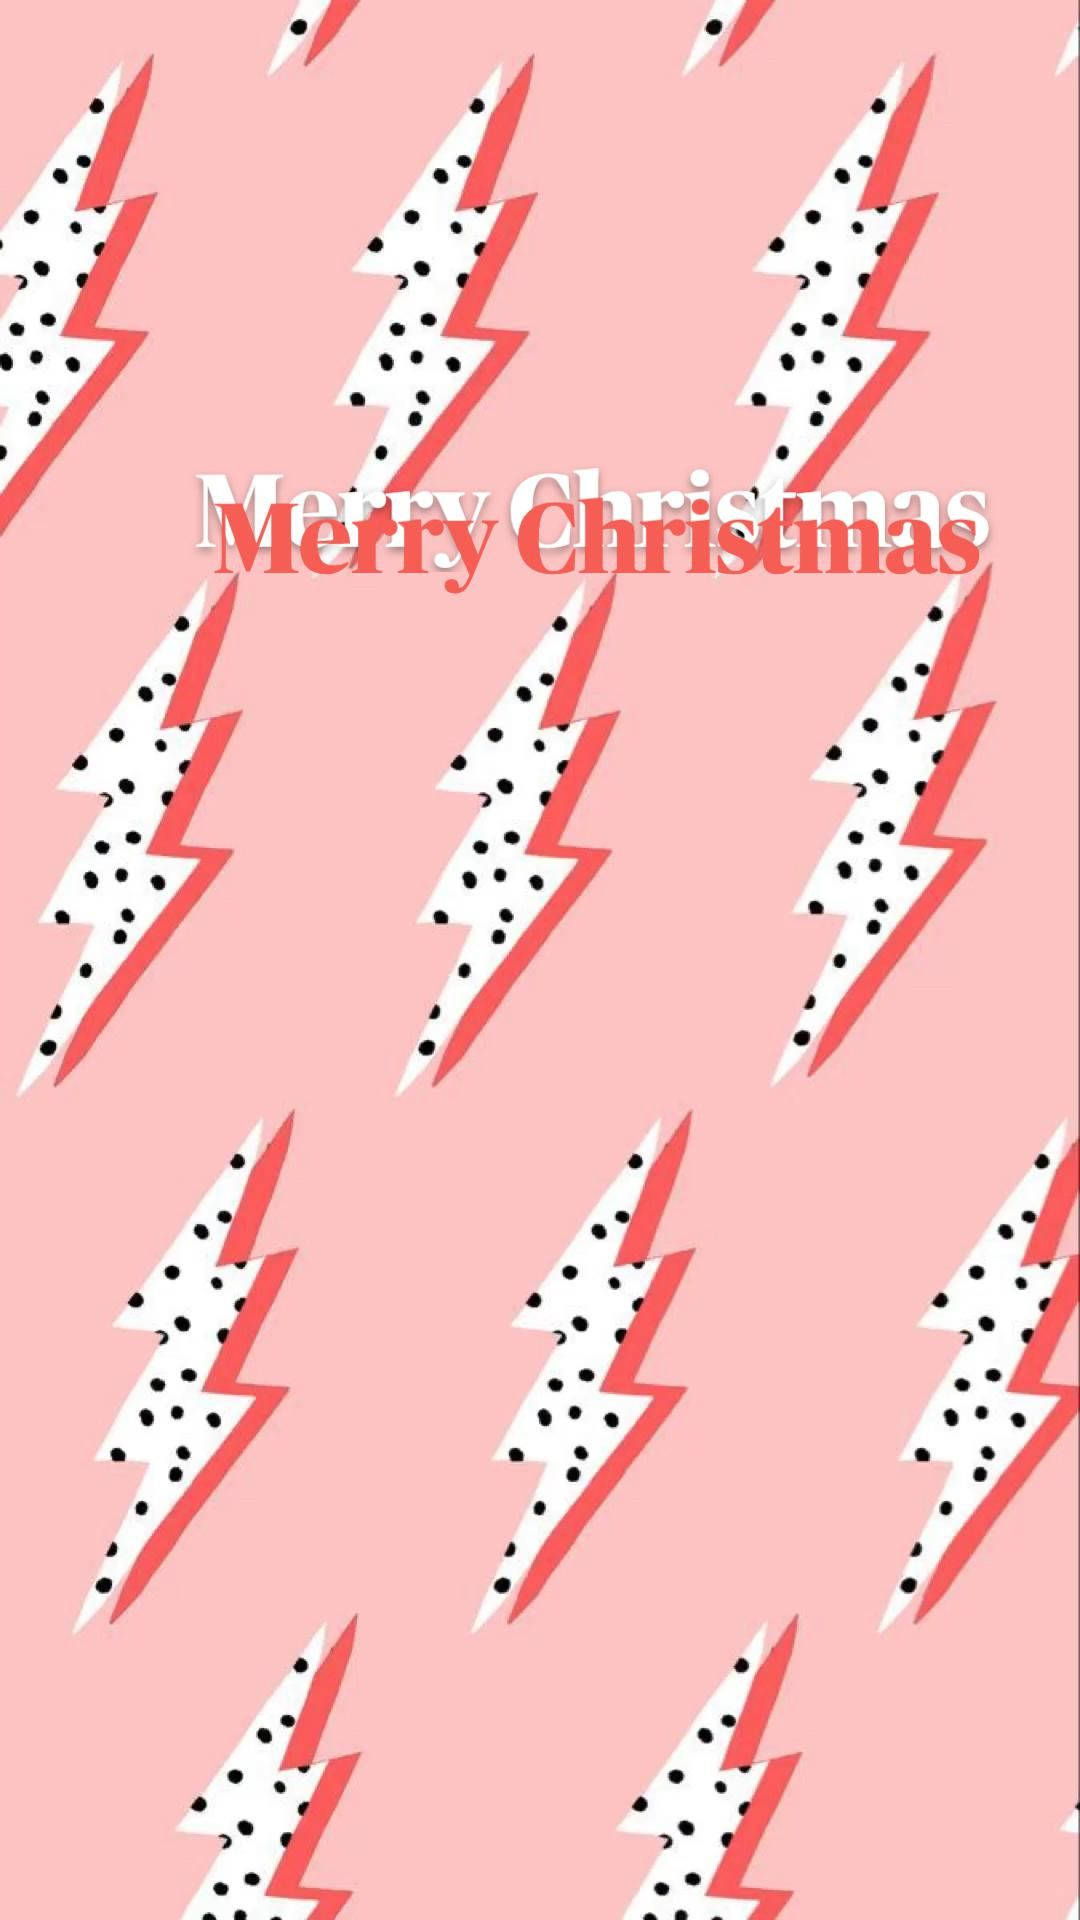 Free Preppy Christmas Wallpaper Downloads, Preppy Christmas Wallpaper for FREE